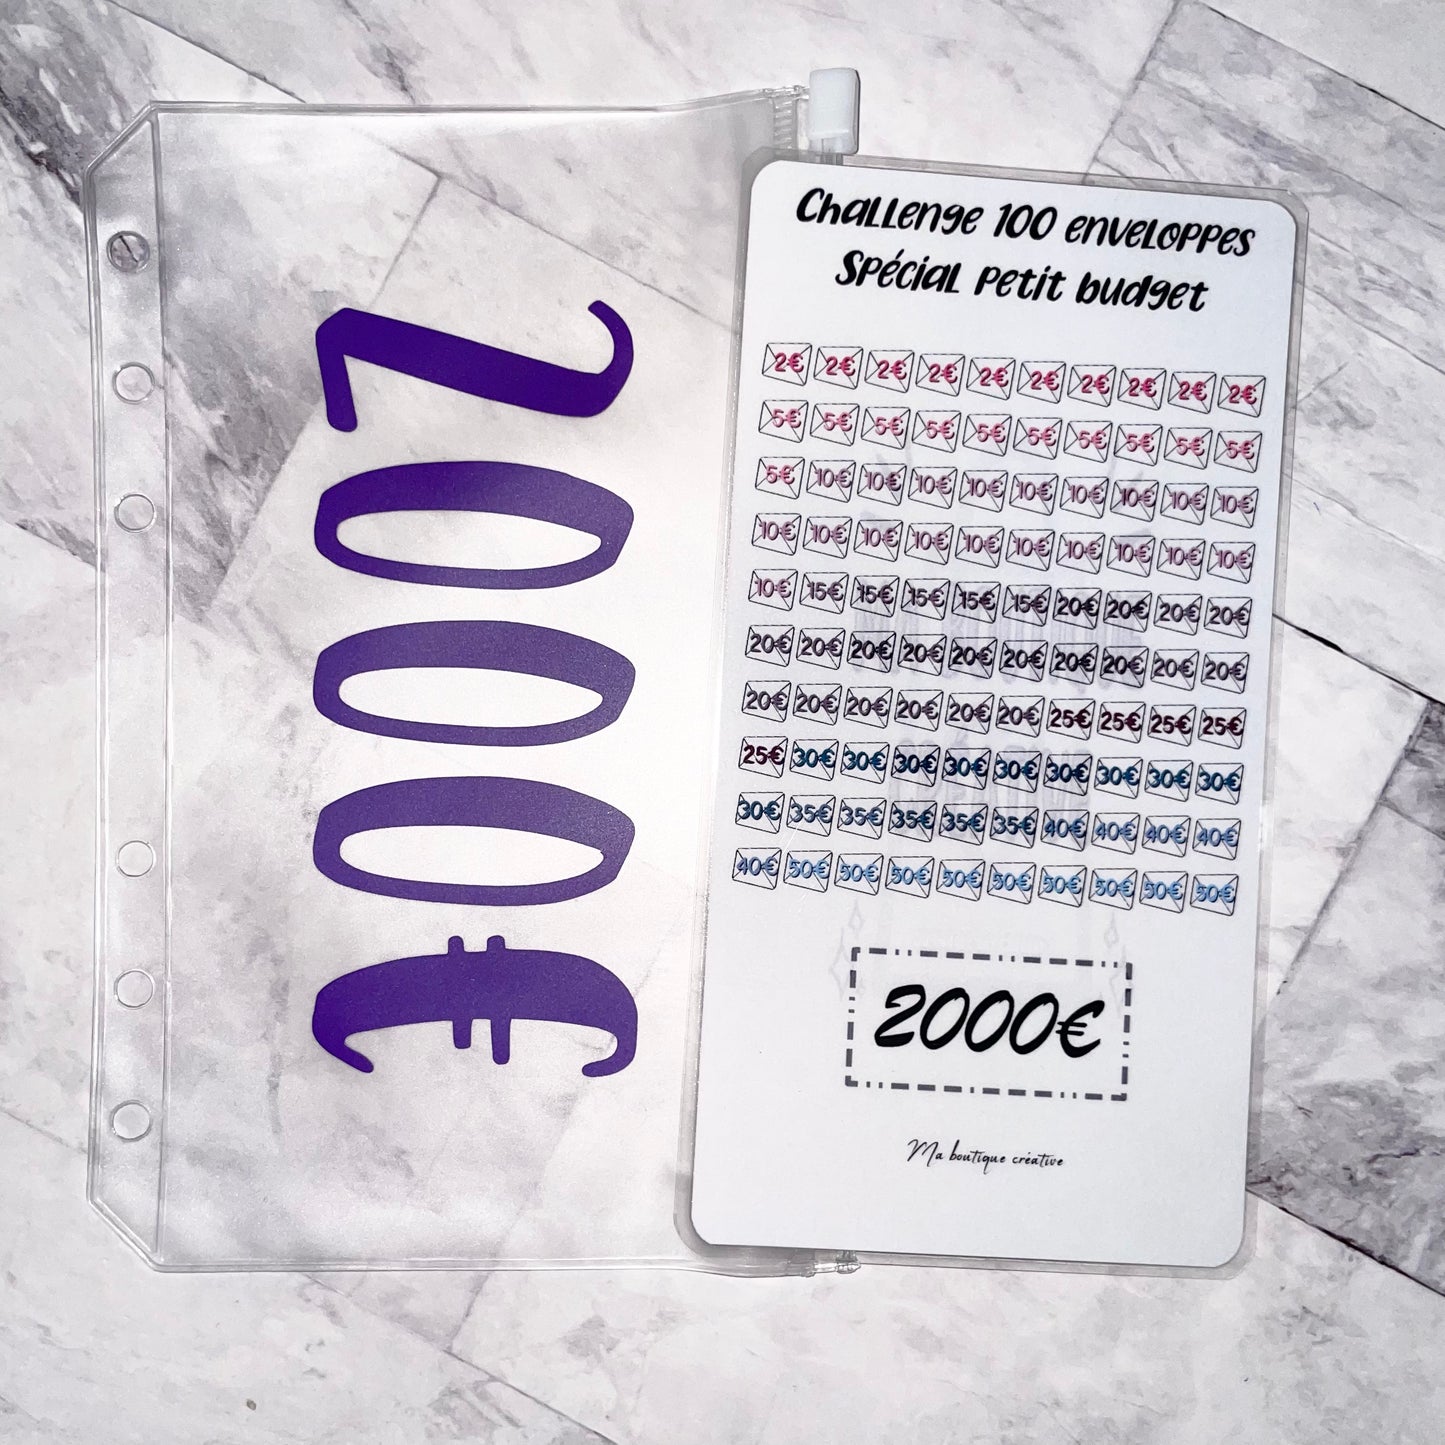 Kit challenge 100 enveloppes petit budget VERSION 2000€ enveloppe zip – Ma  boutique creative